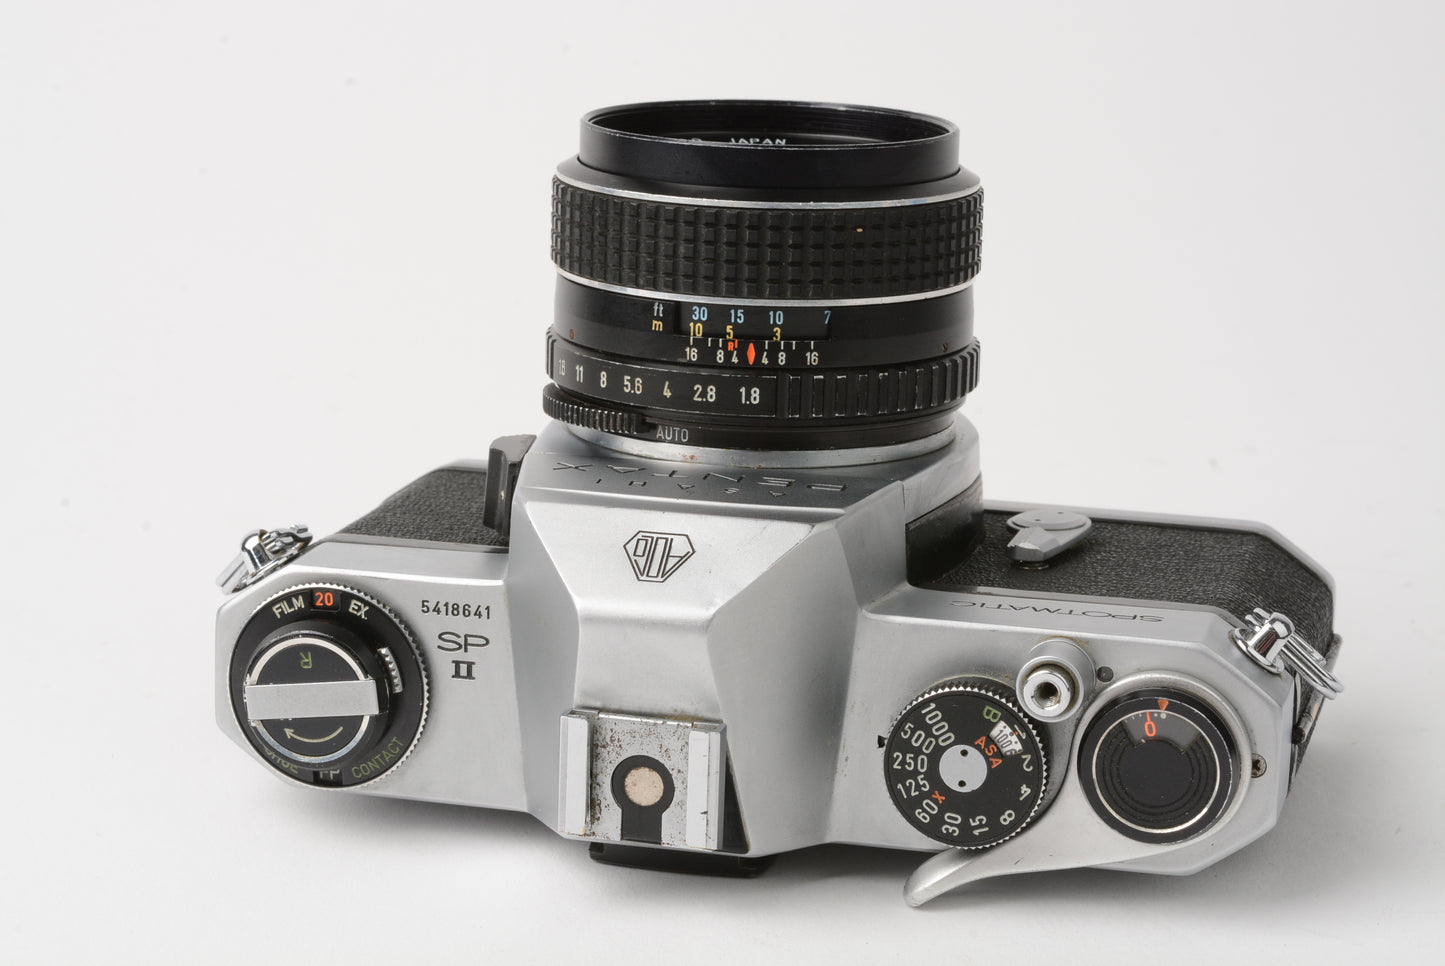 Nikon Nikkor Z 50mm f/1.8 S Lens MFR 20083, Mint, Boxed, USA